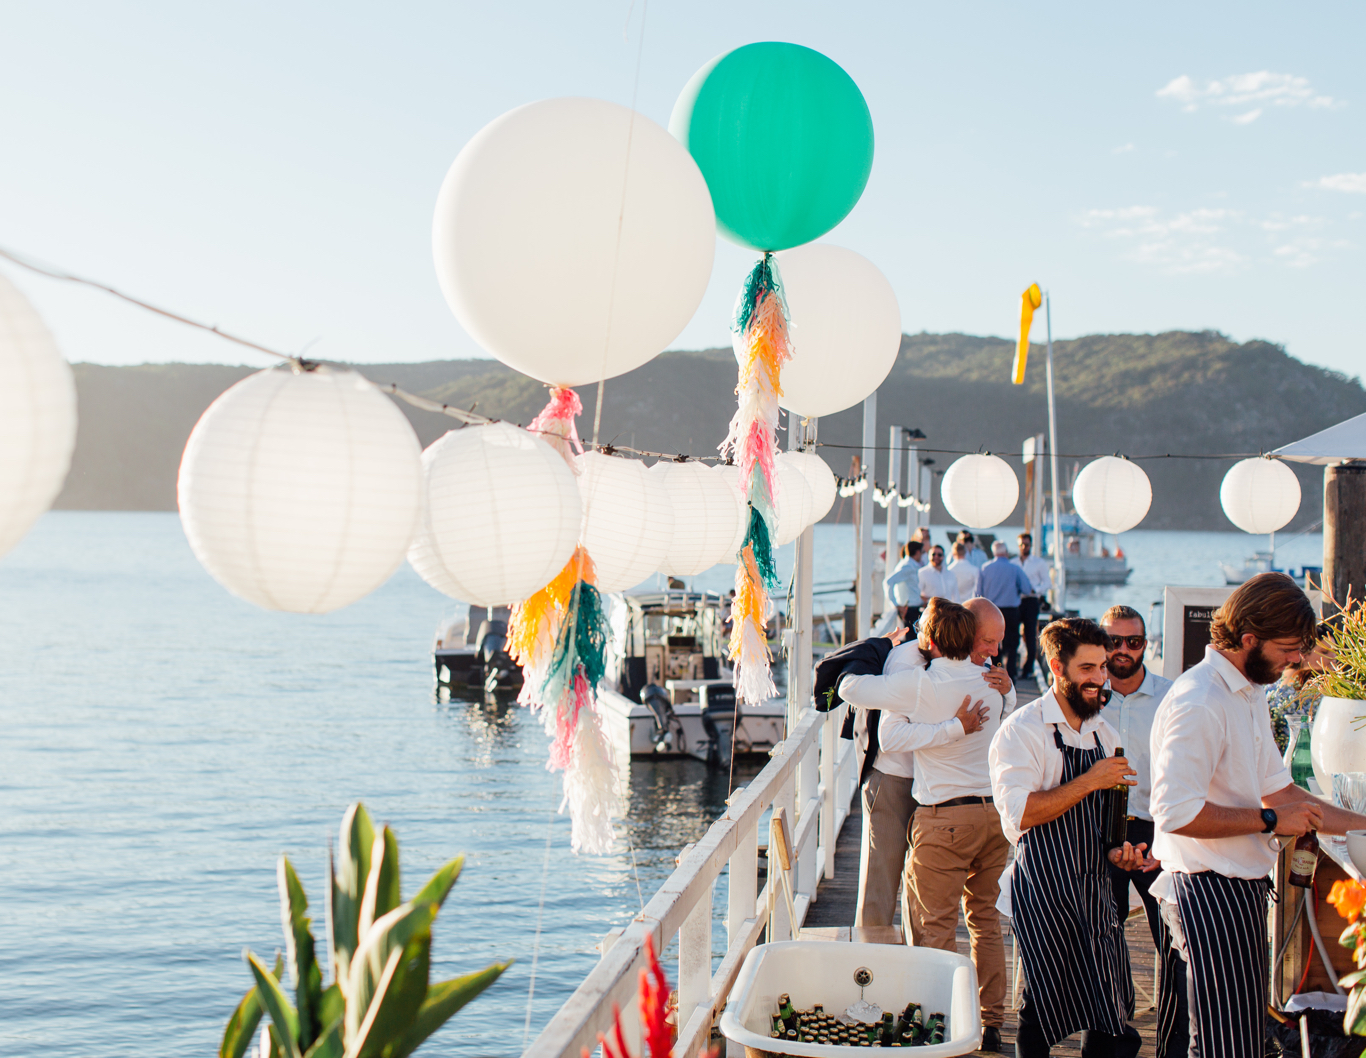 Decorative balloons strung across a jetty.